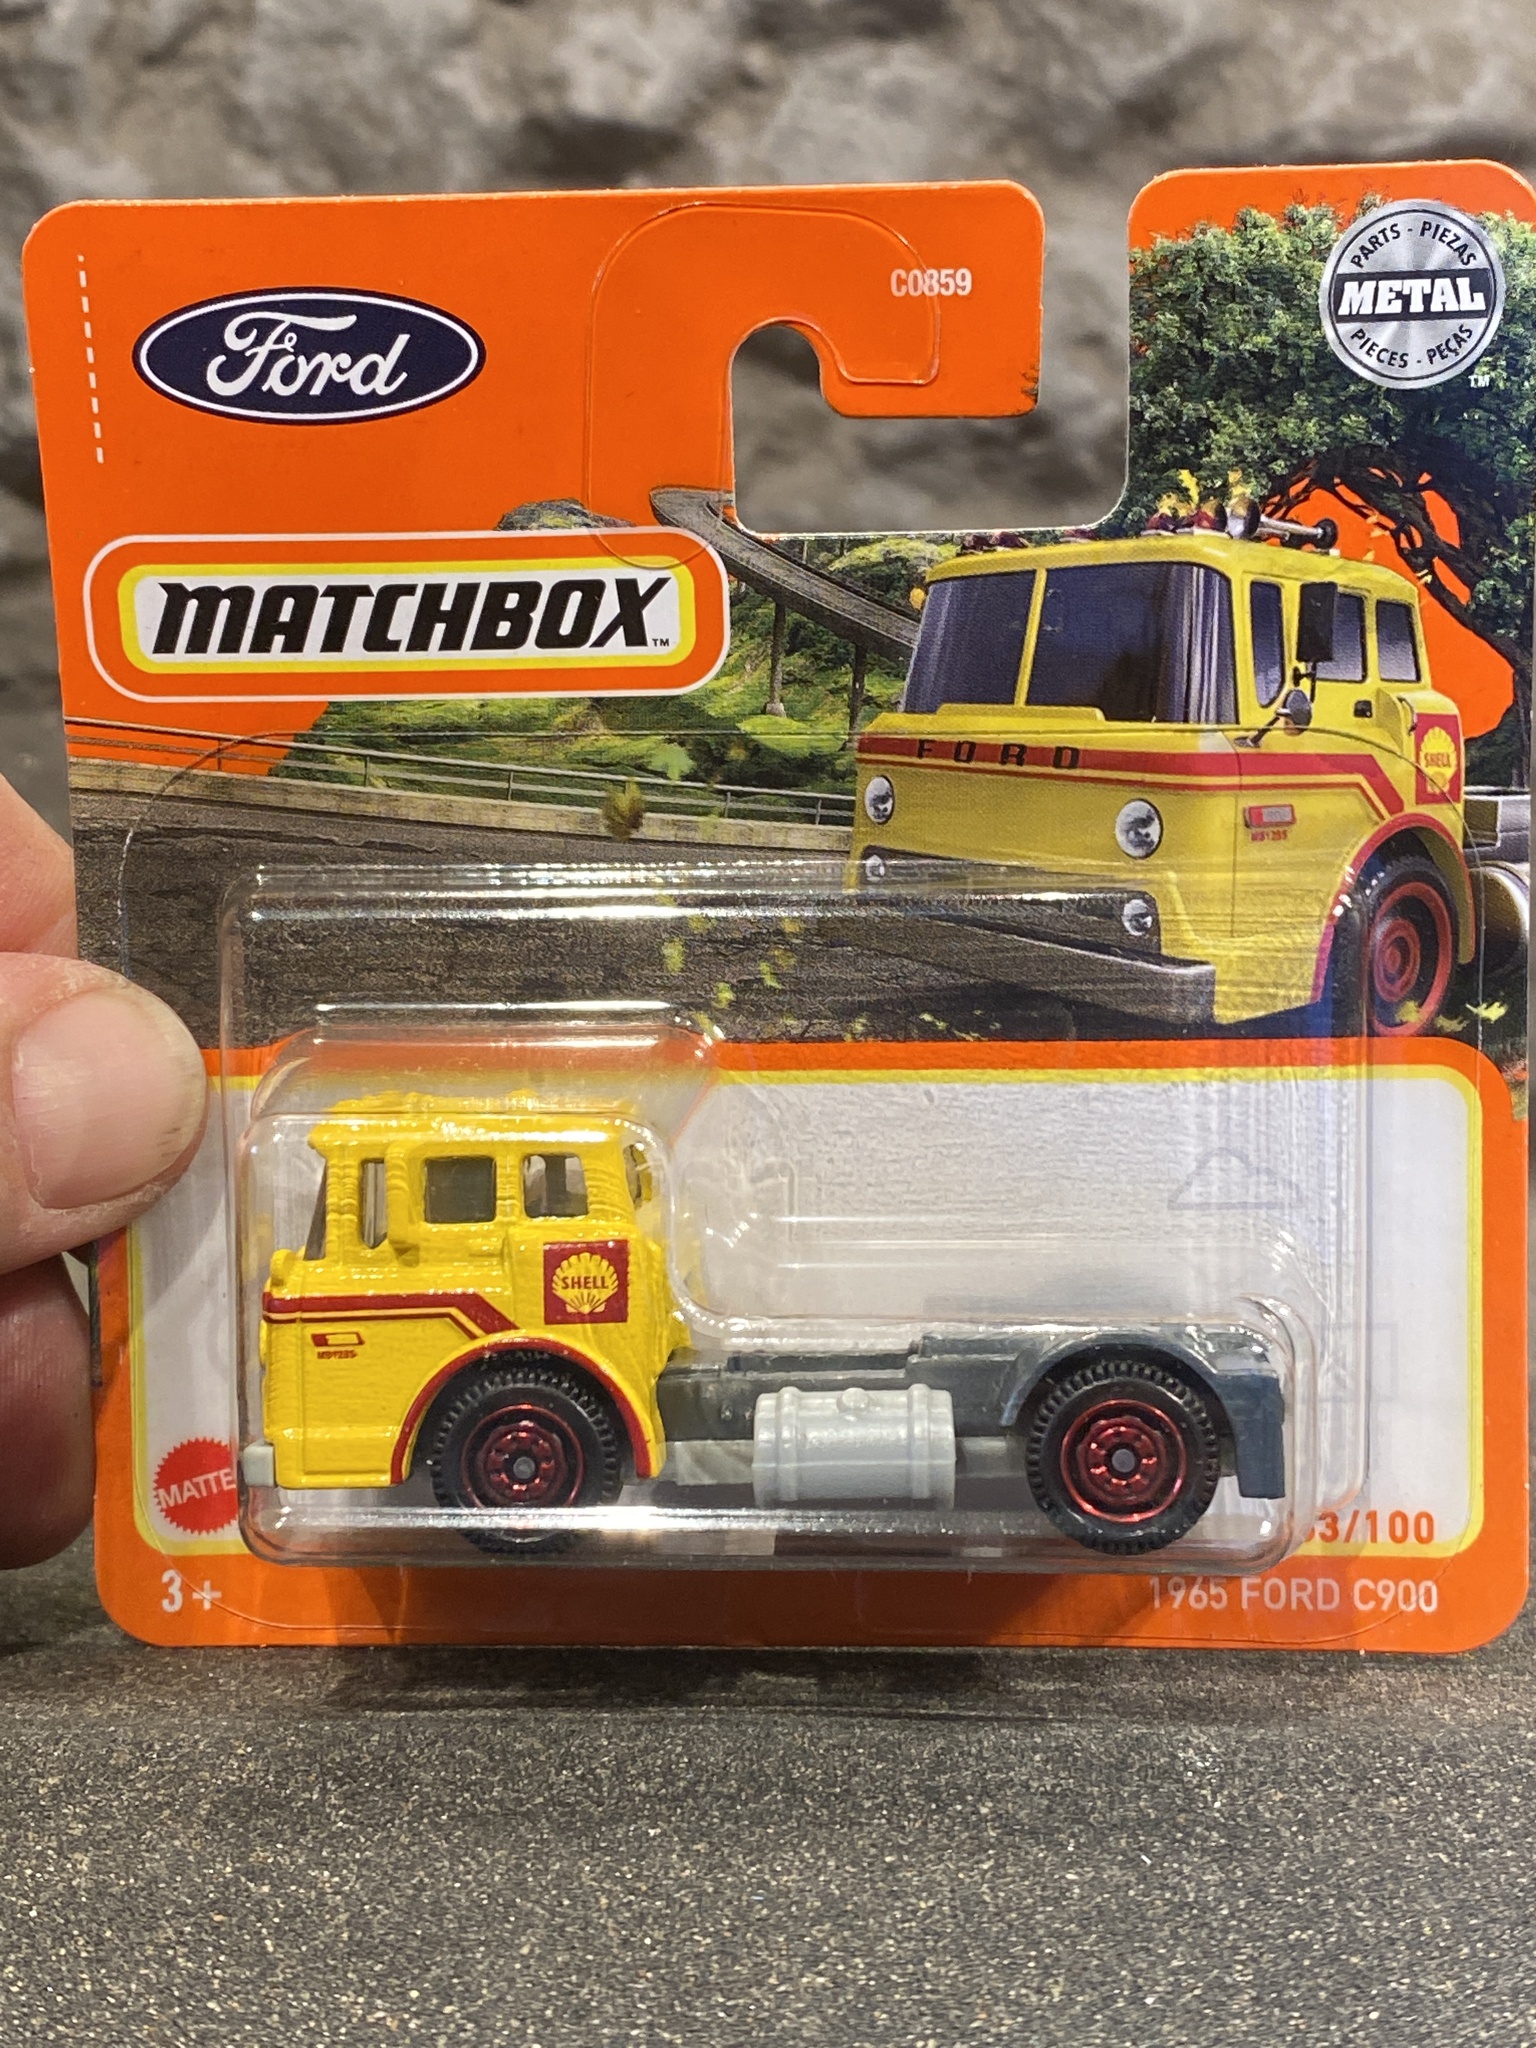 Skala 1/64 Matchbox -  Ford C900 65'